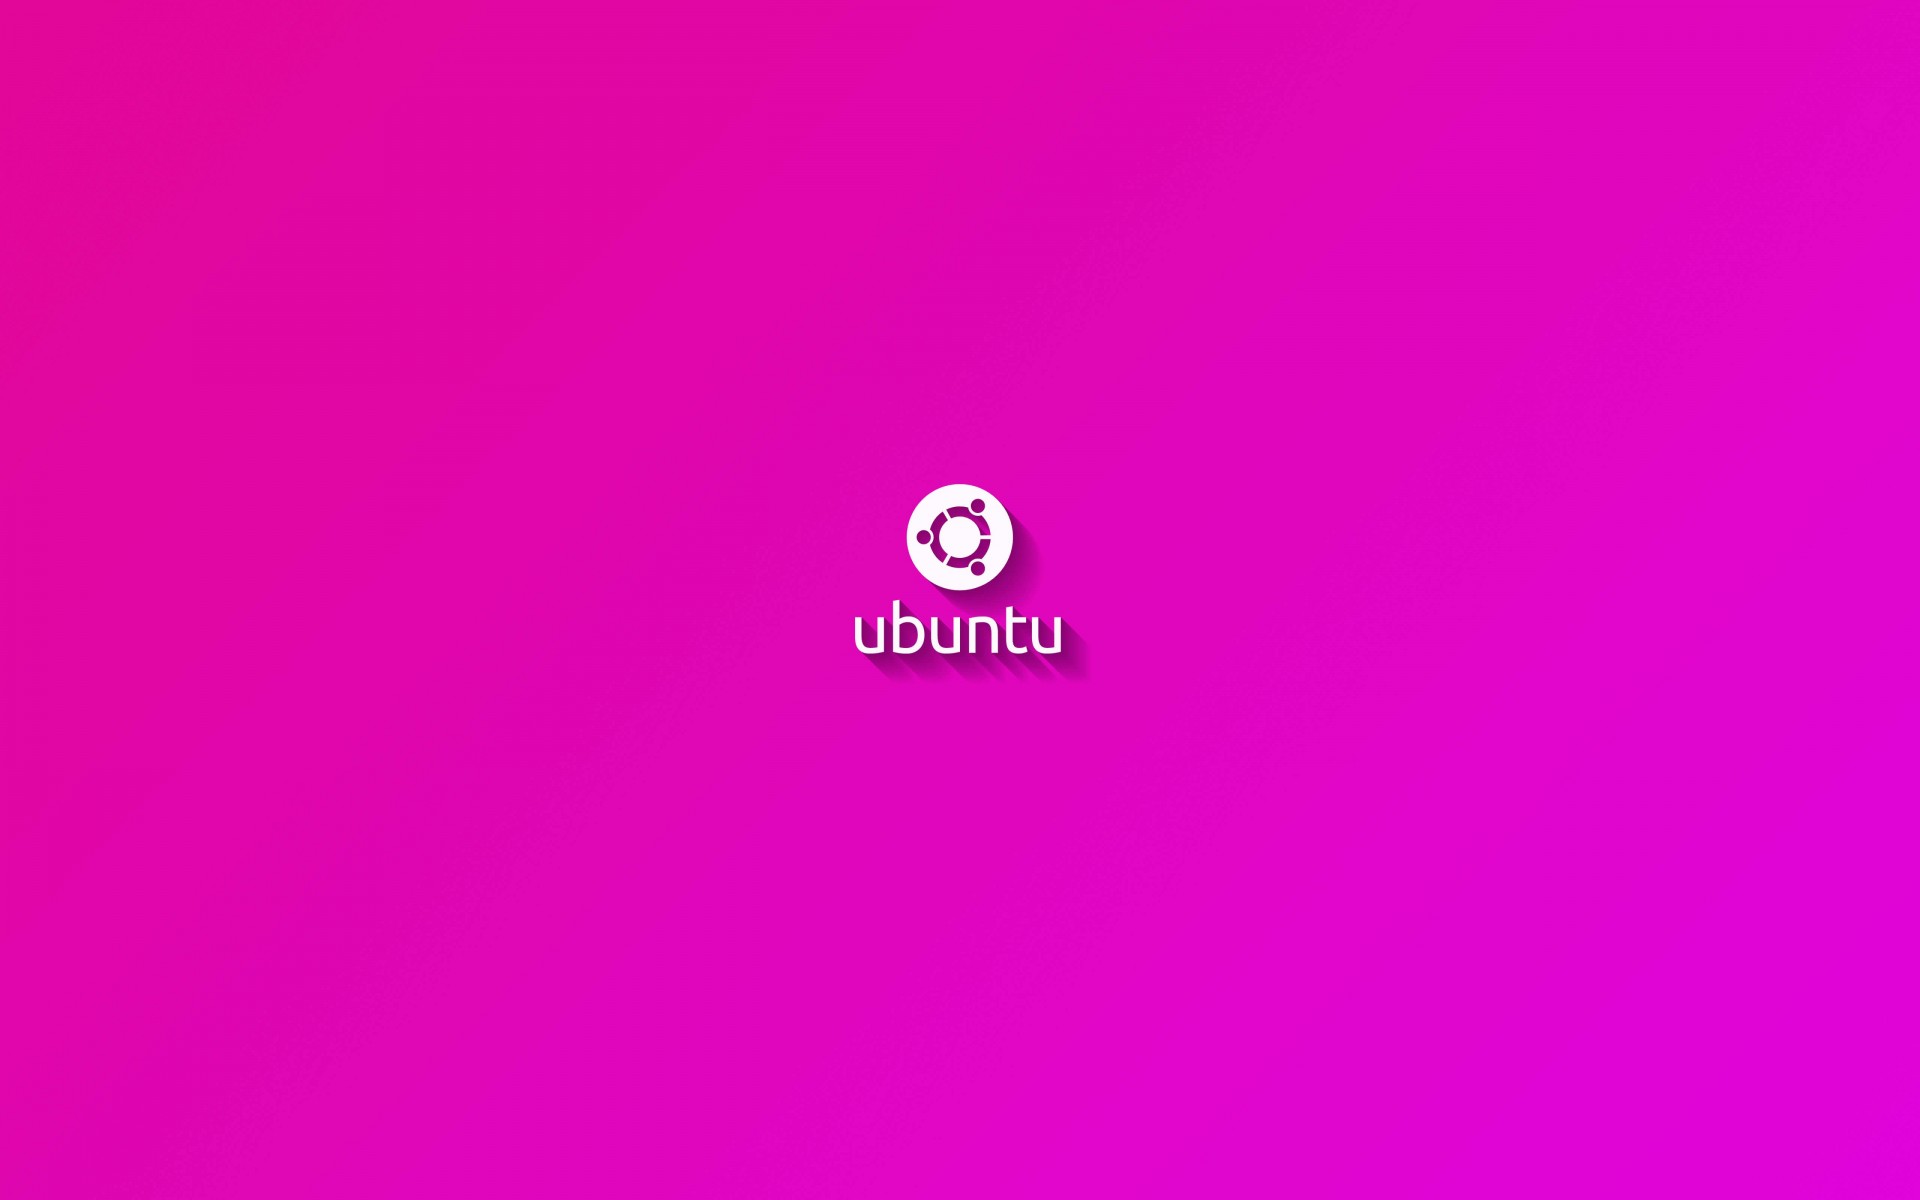 Ubuntu Flat Shadow Pink Wallpaper for Desktop 1920x1200